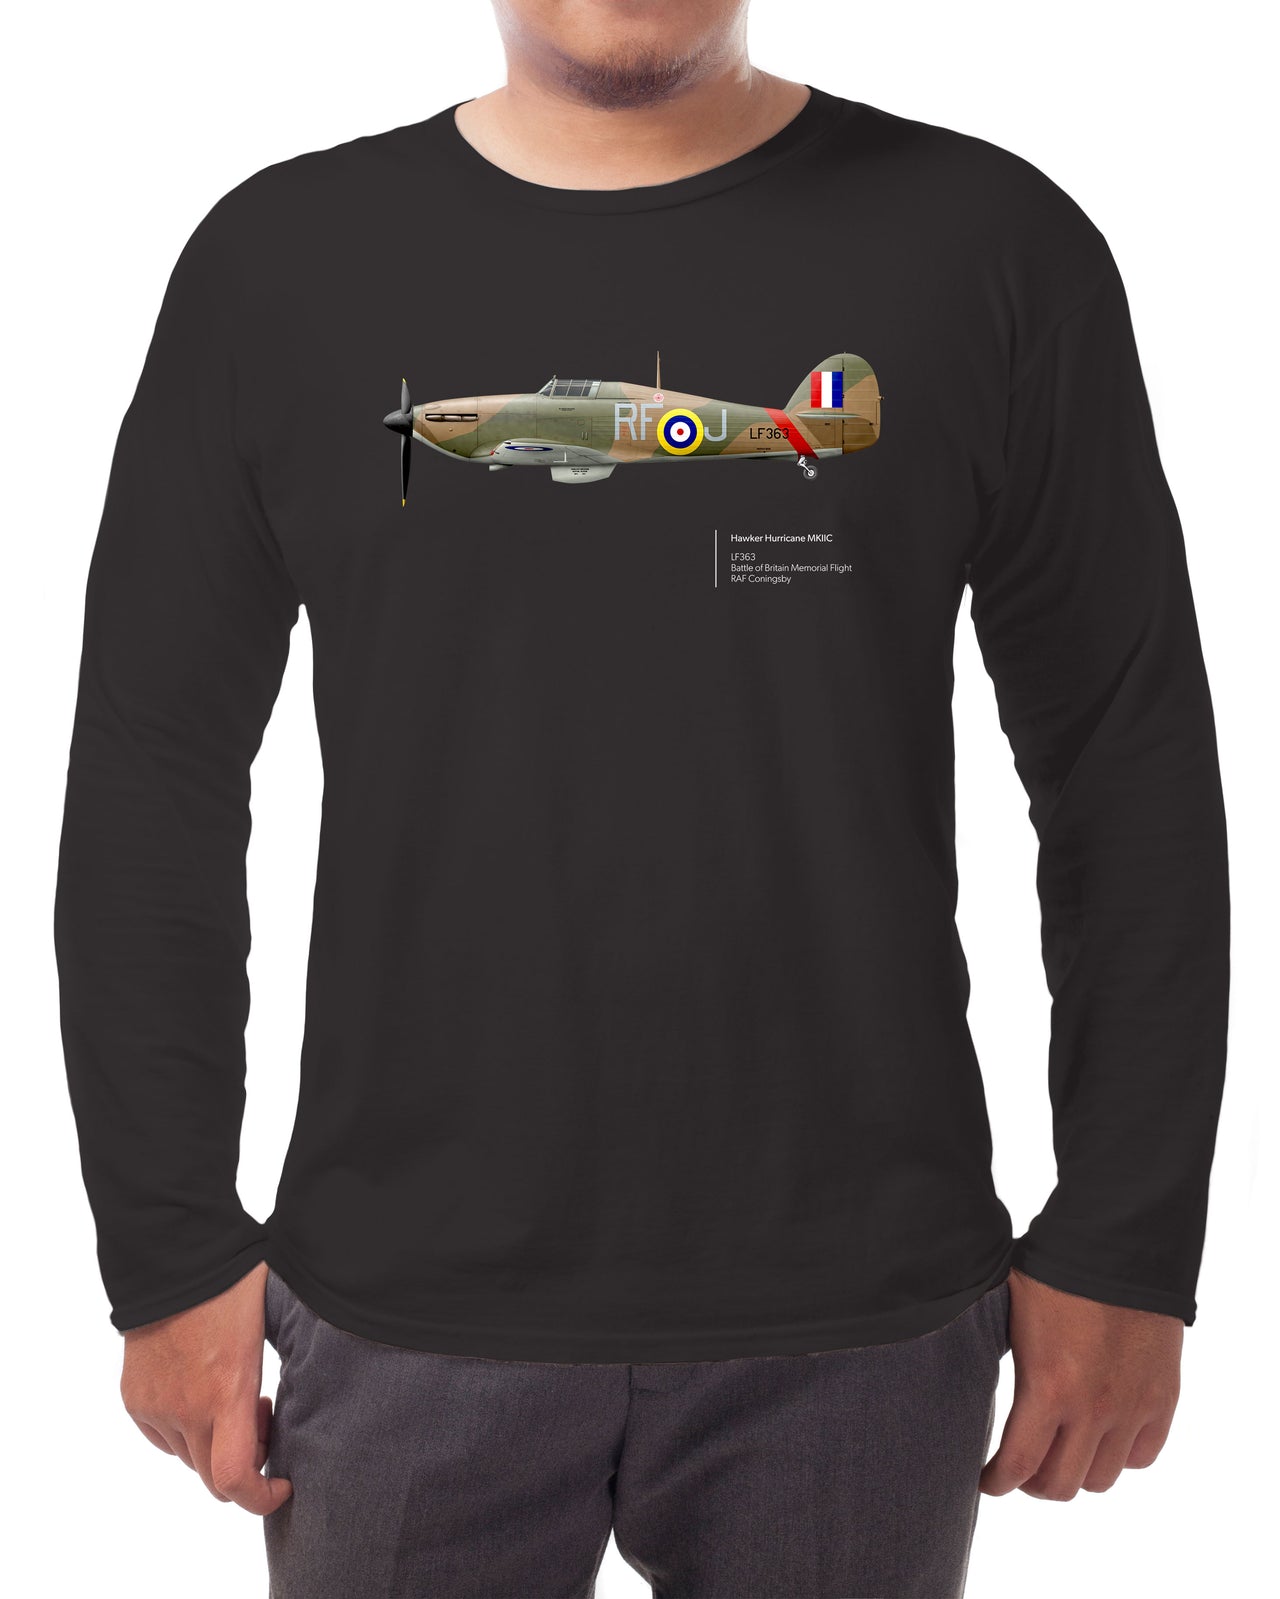 BBMF Hurricane MKIIC - Long-sleeve T-shirt